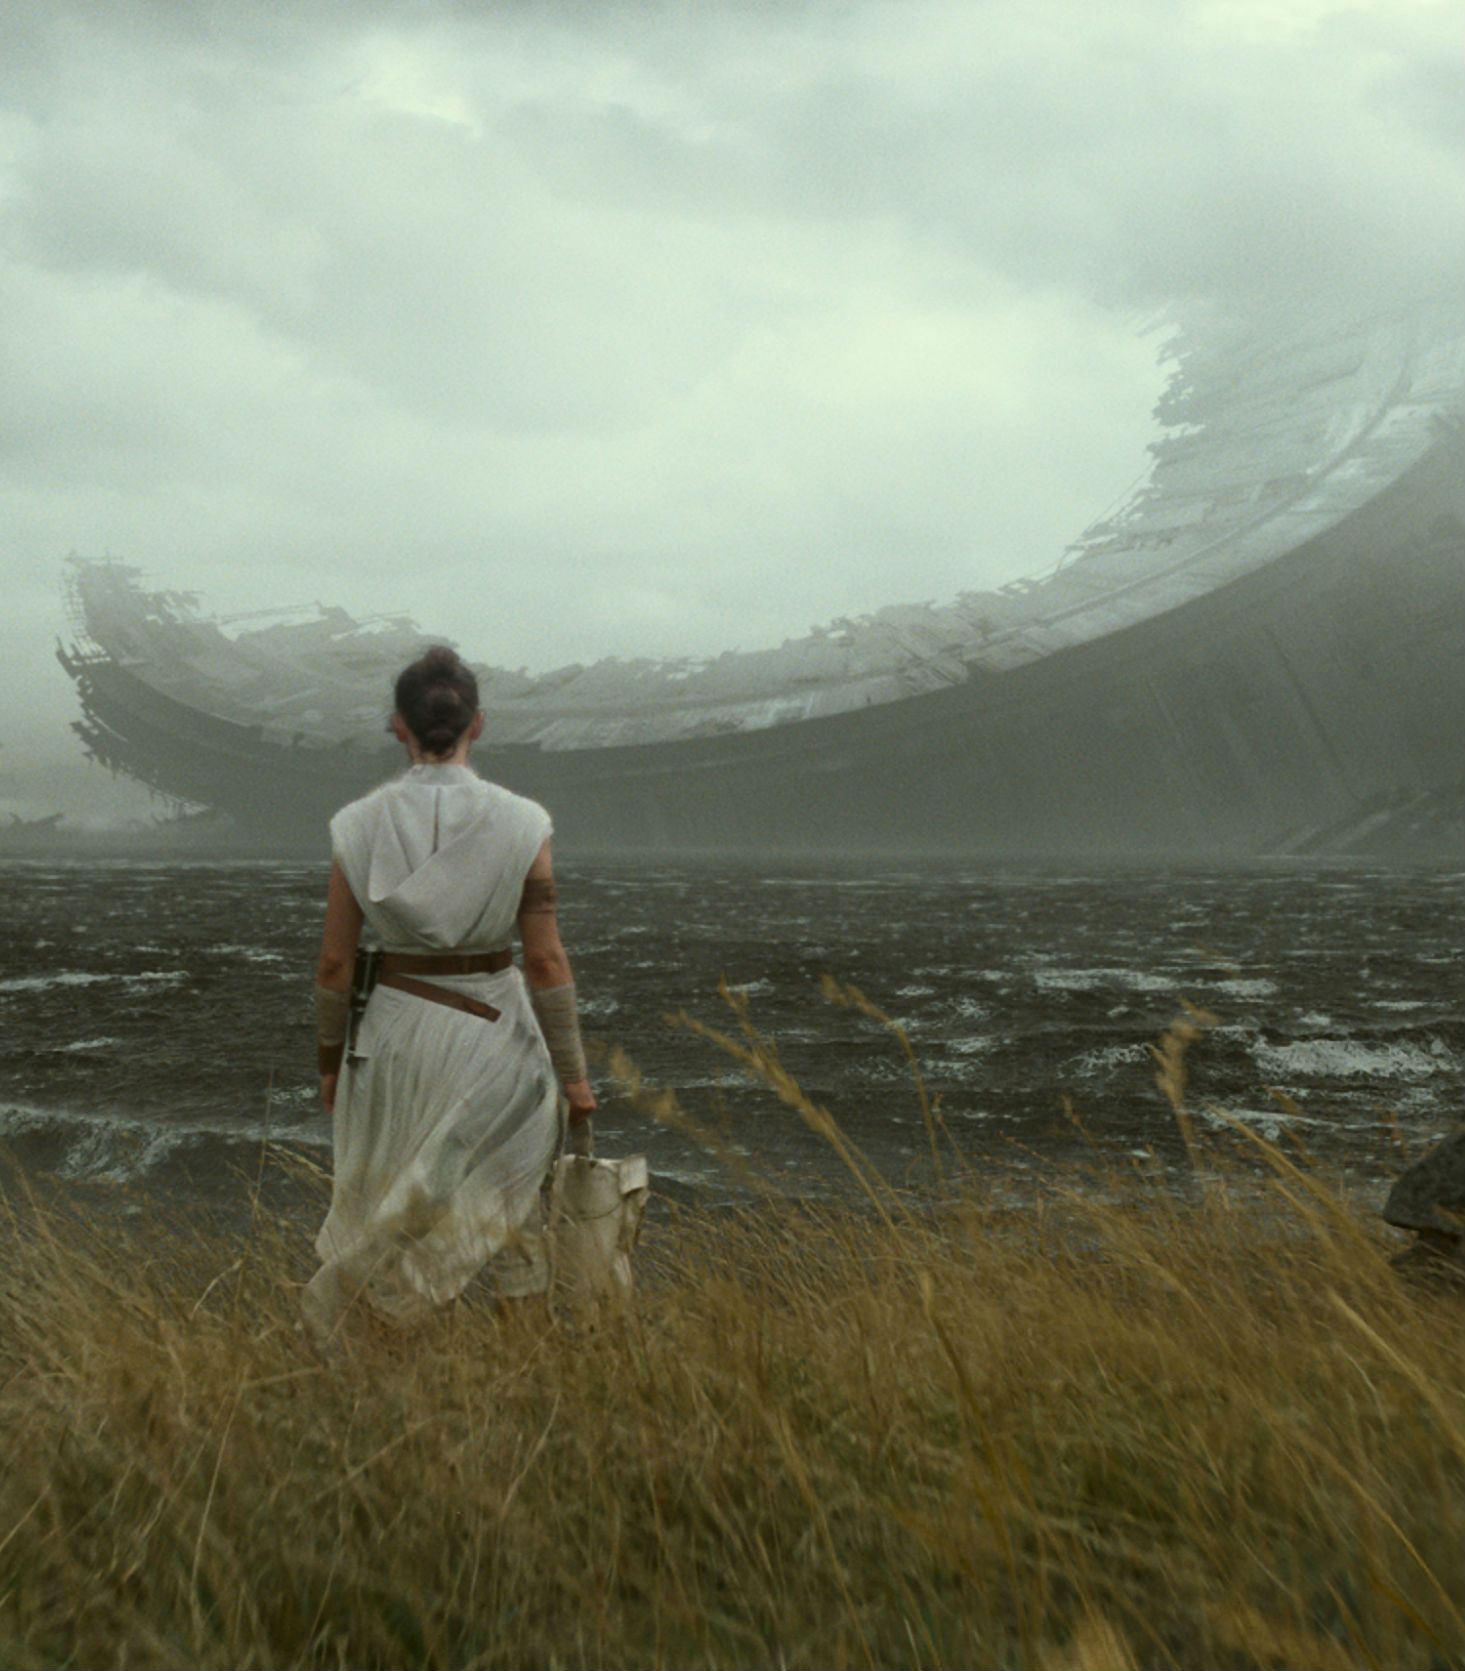 Star Wars The Rise of Skywalker Trailer - Death Star Vertical